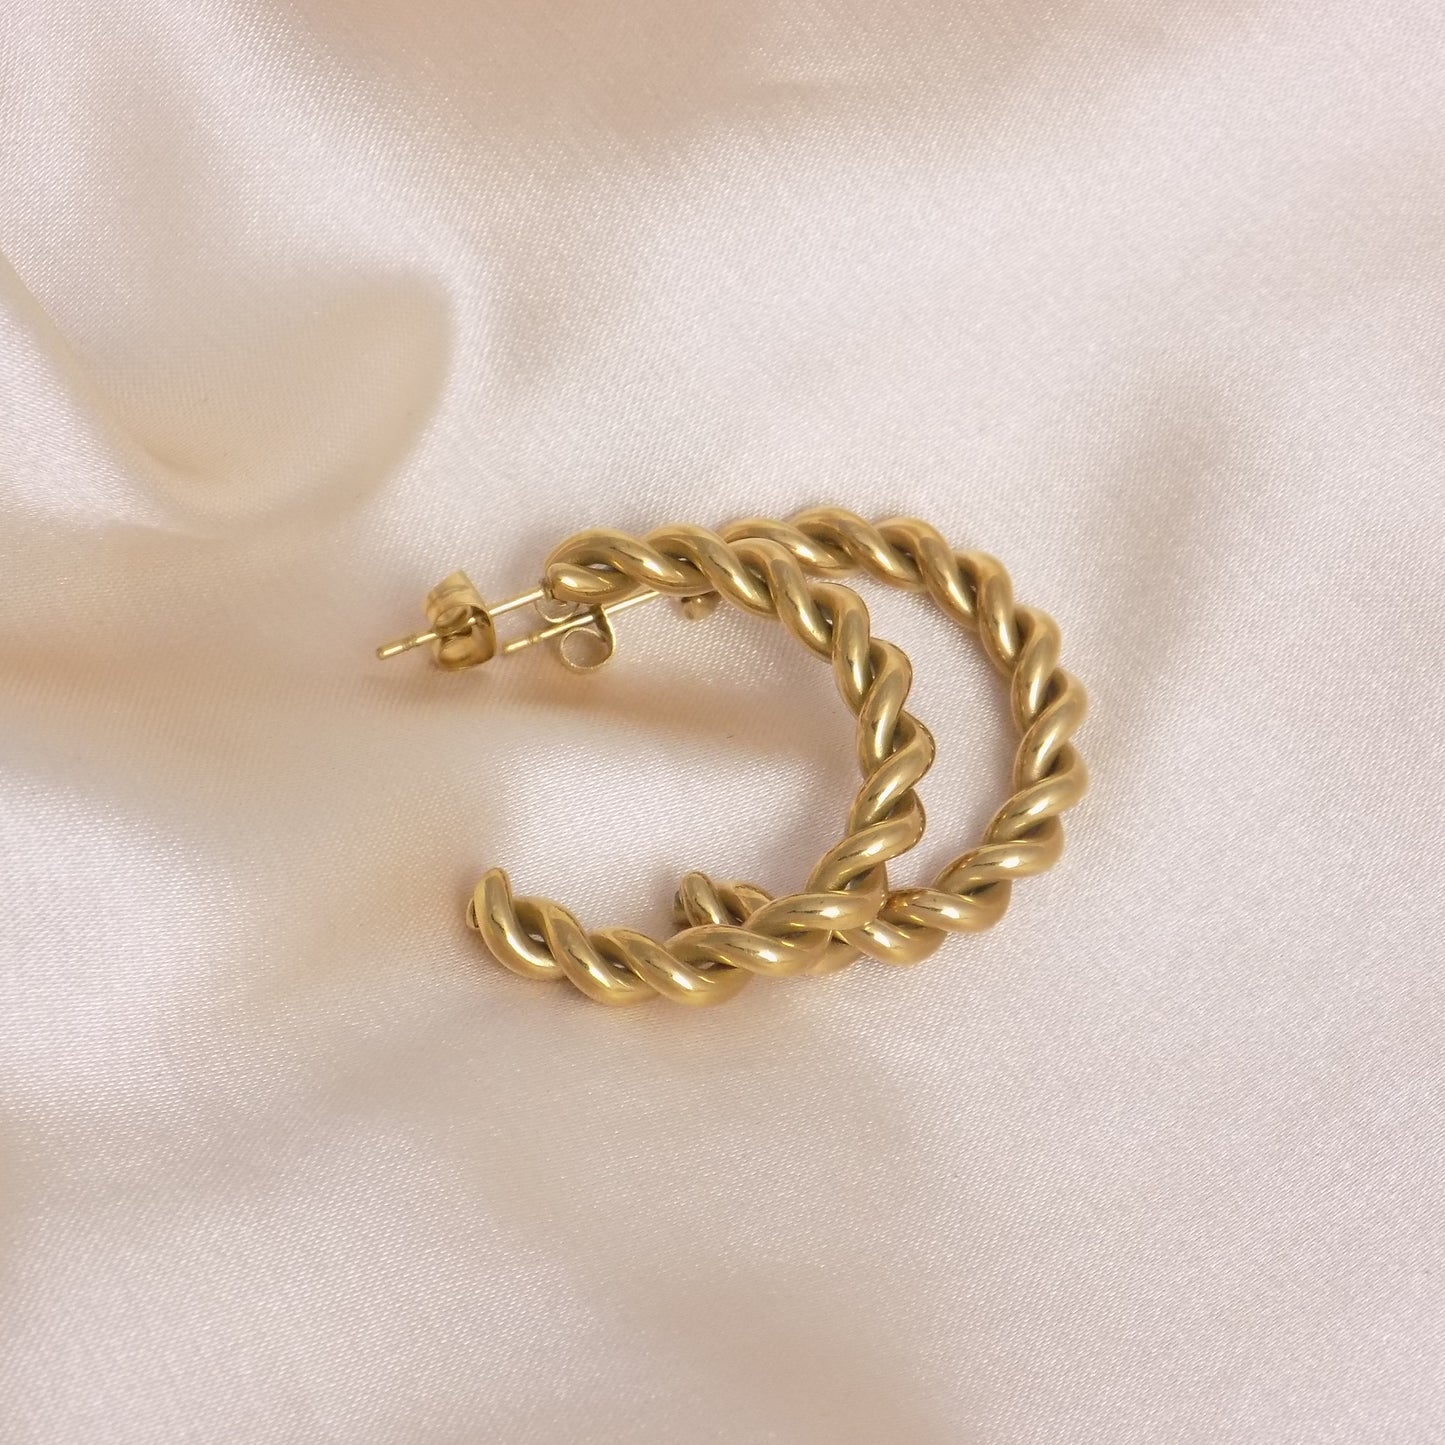 18K Gold Twisted Hoop Earrings Studs Stainless Steel - Minimalist Everyday Jewelry